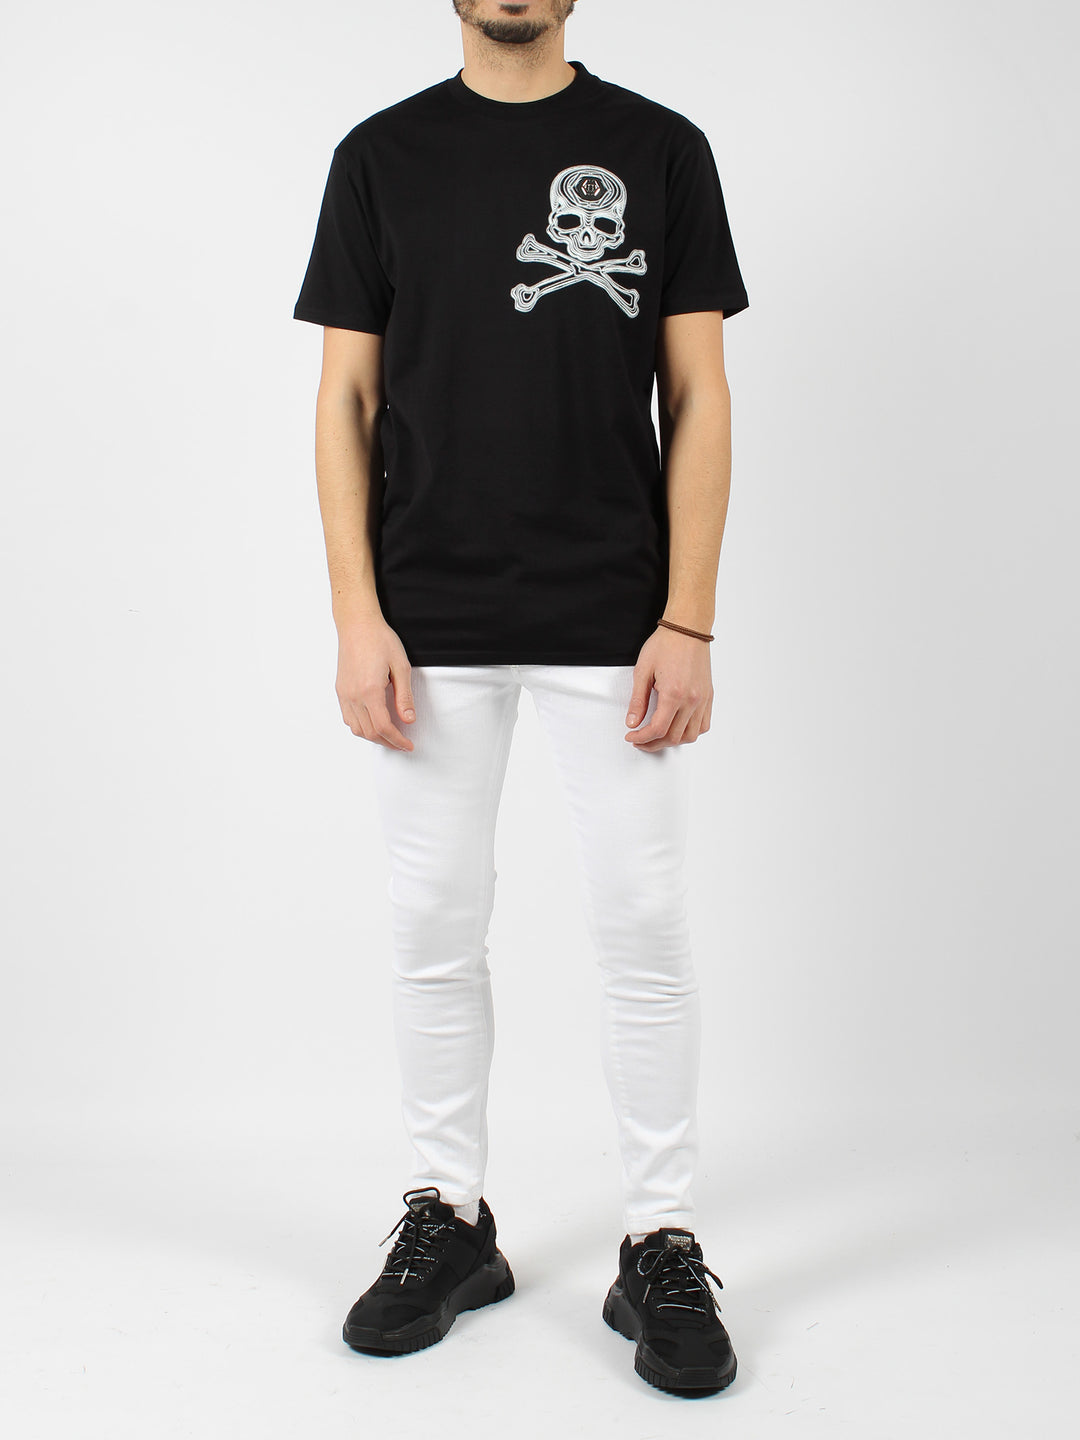 Round neck ss skull&bones t-shirt